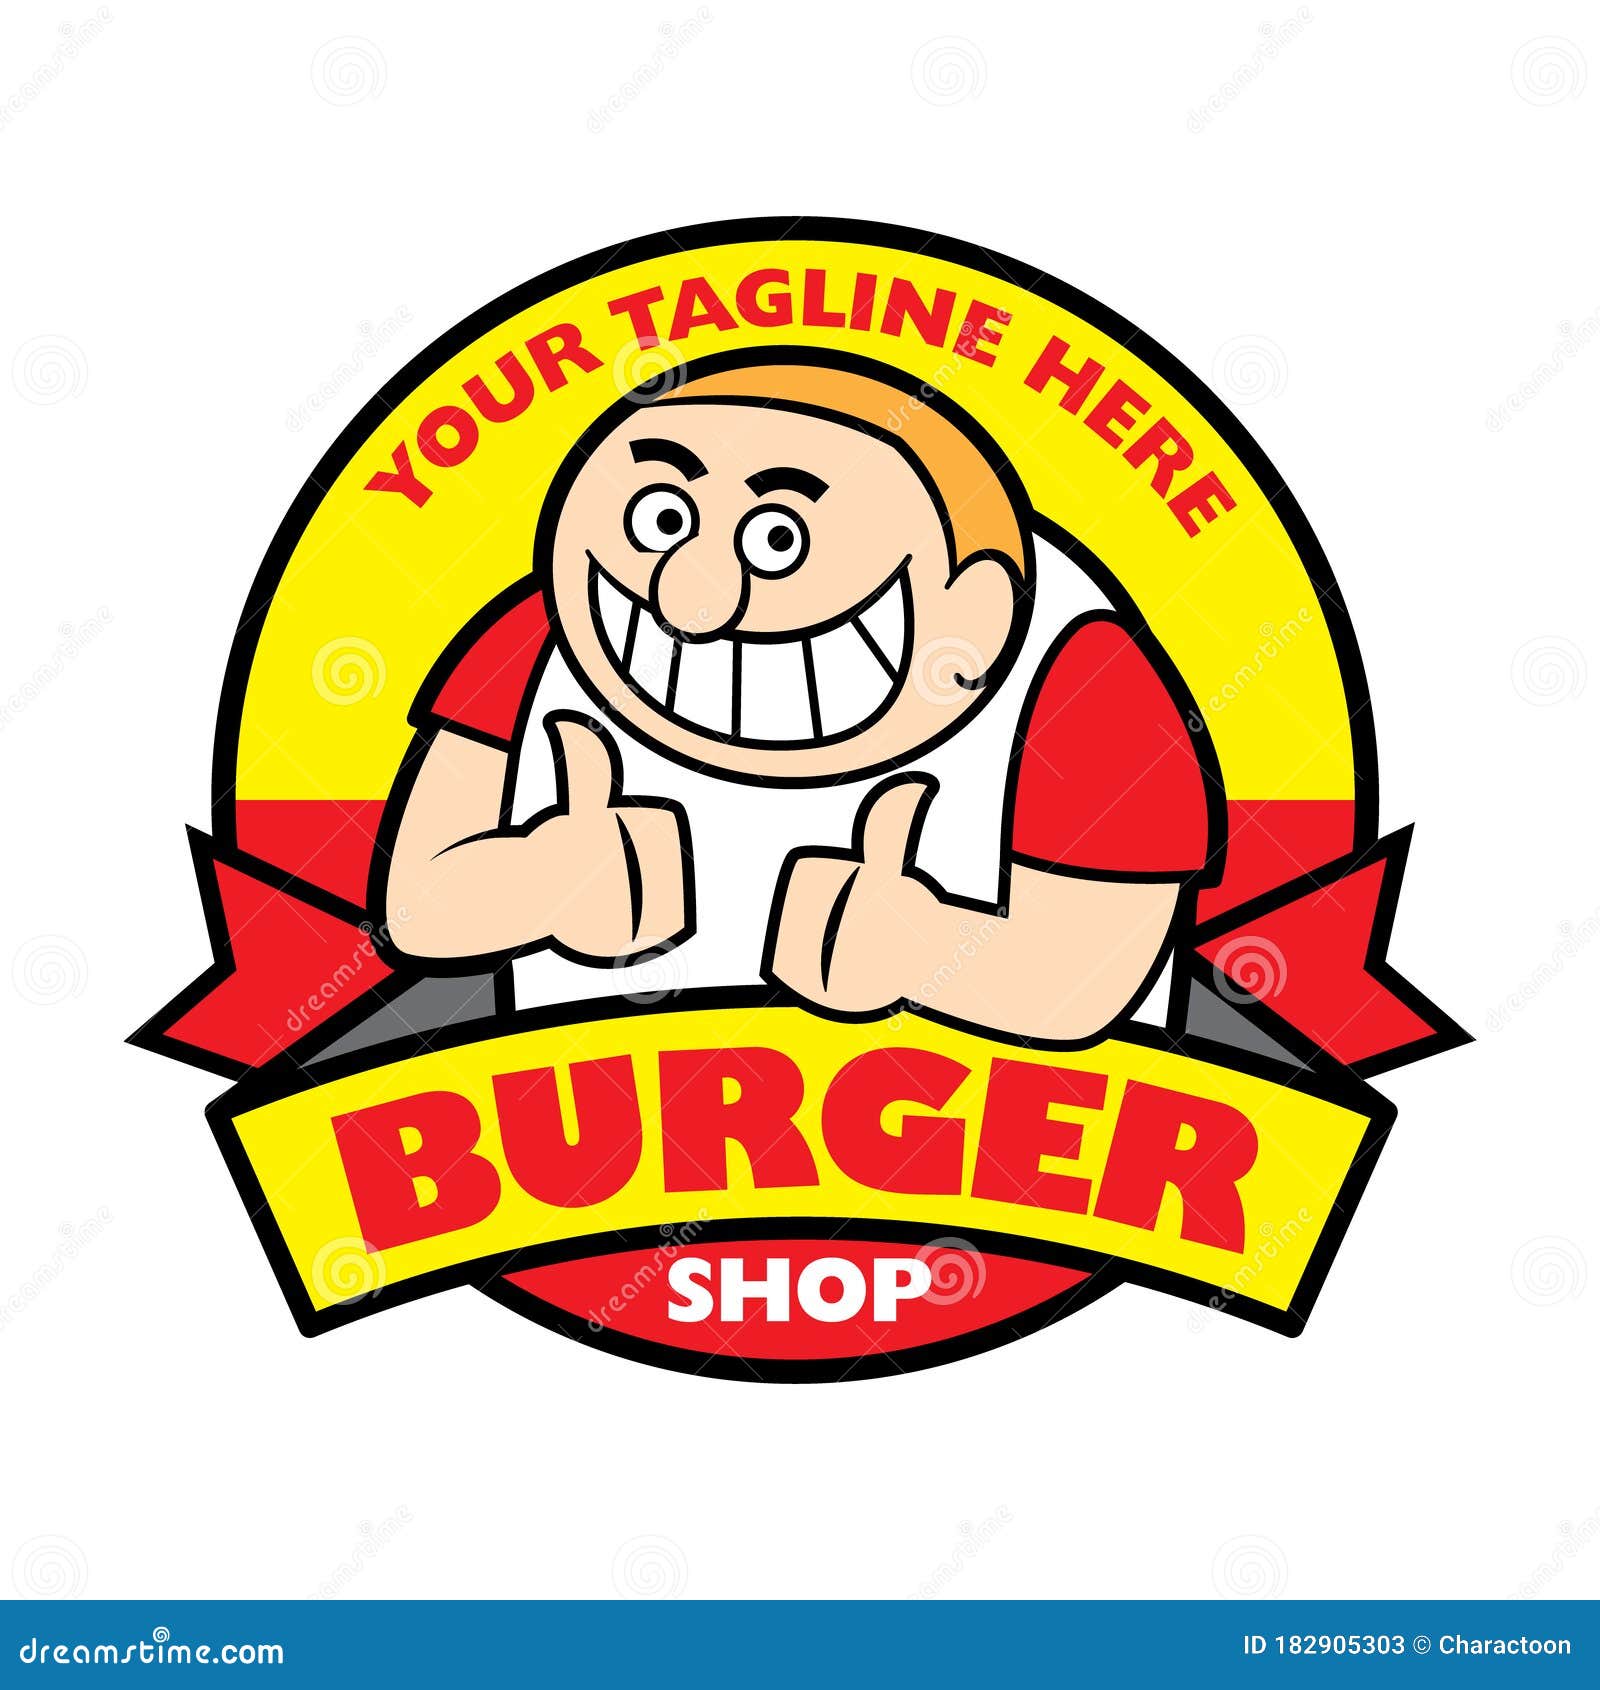 Burger Shop Business with Shop Name. Cartoon Smiling Fat Man with Big Teeth  Show 2 Big Thumb Ups Stock Vector - Illustration of food, hand: 182905303